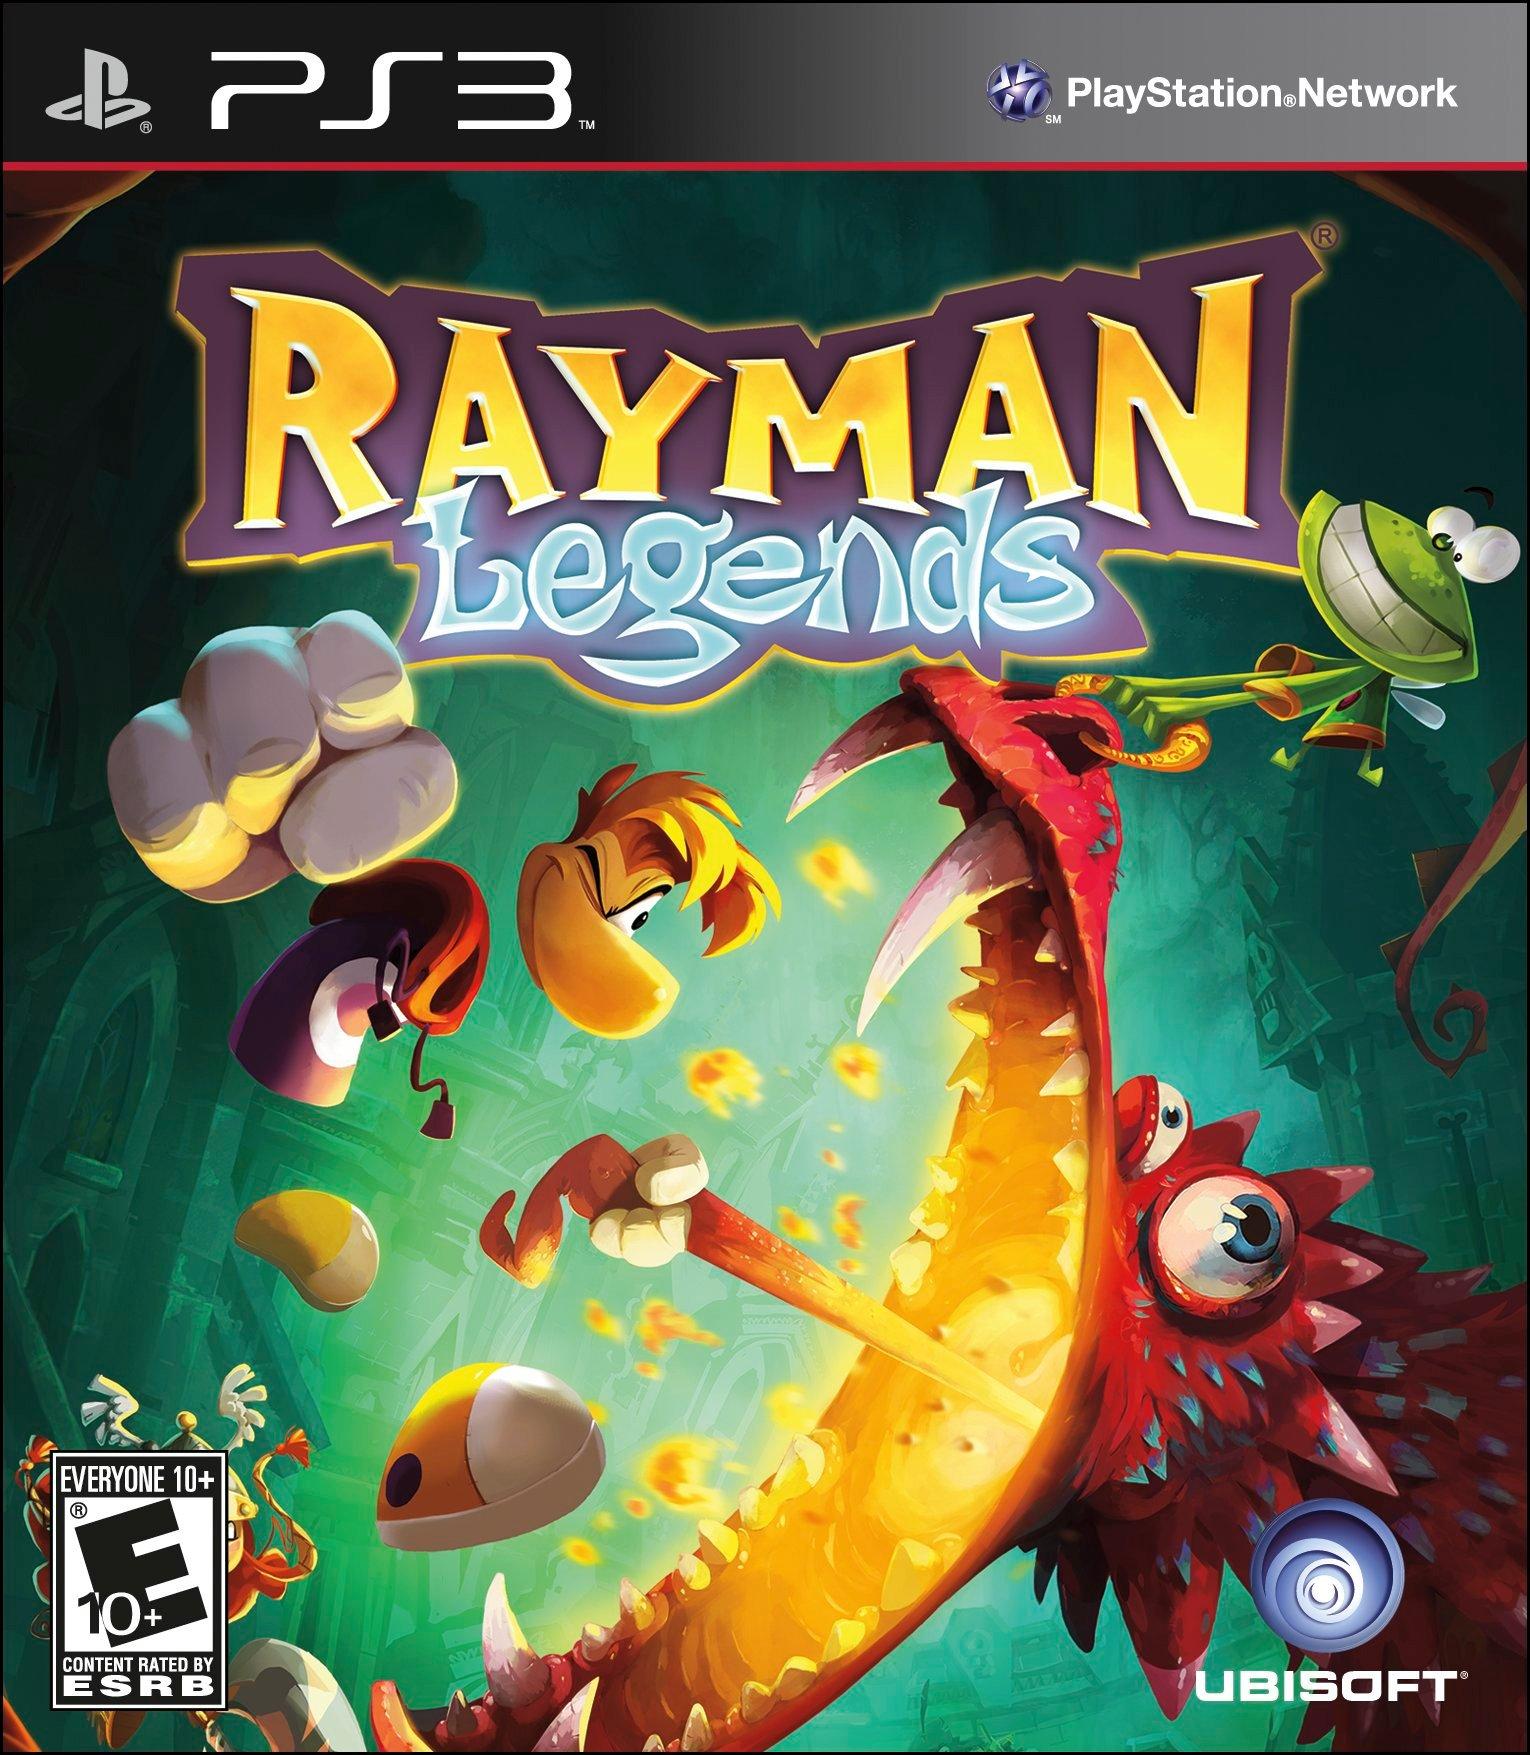  Rayman Legends Definitive Edition - Nintendo Switch : Ubisoft:  Video Games